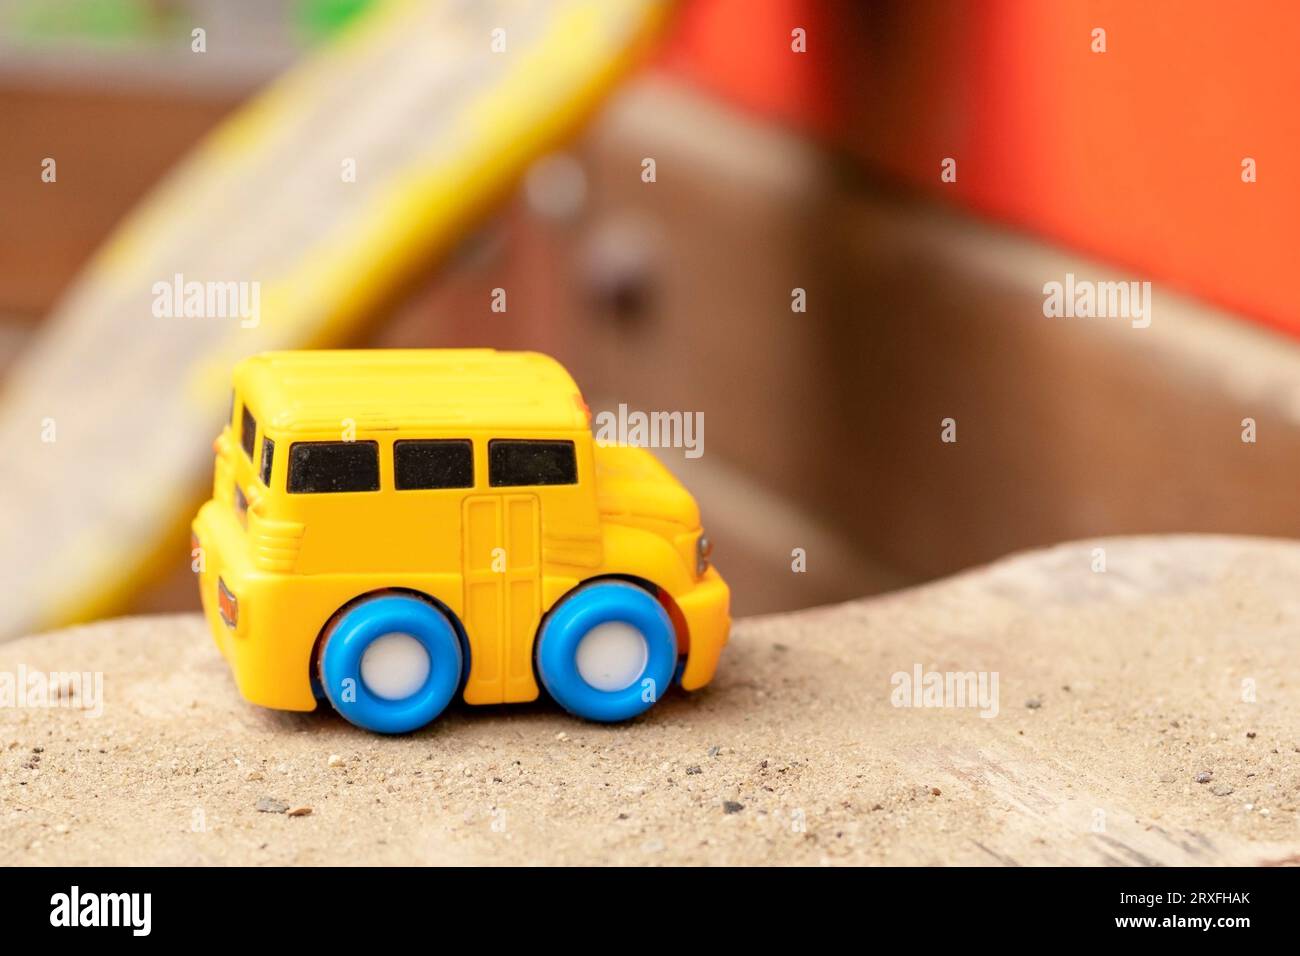 Toy Car. Toy machine. Plastic toy car. Concept motor transport, vehicle, childhood, kid stuff Stock Photo